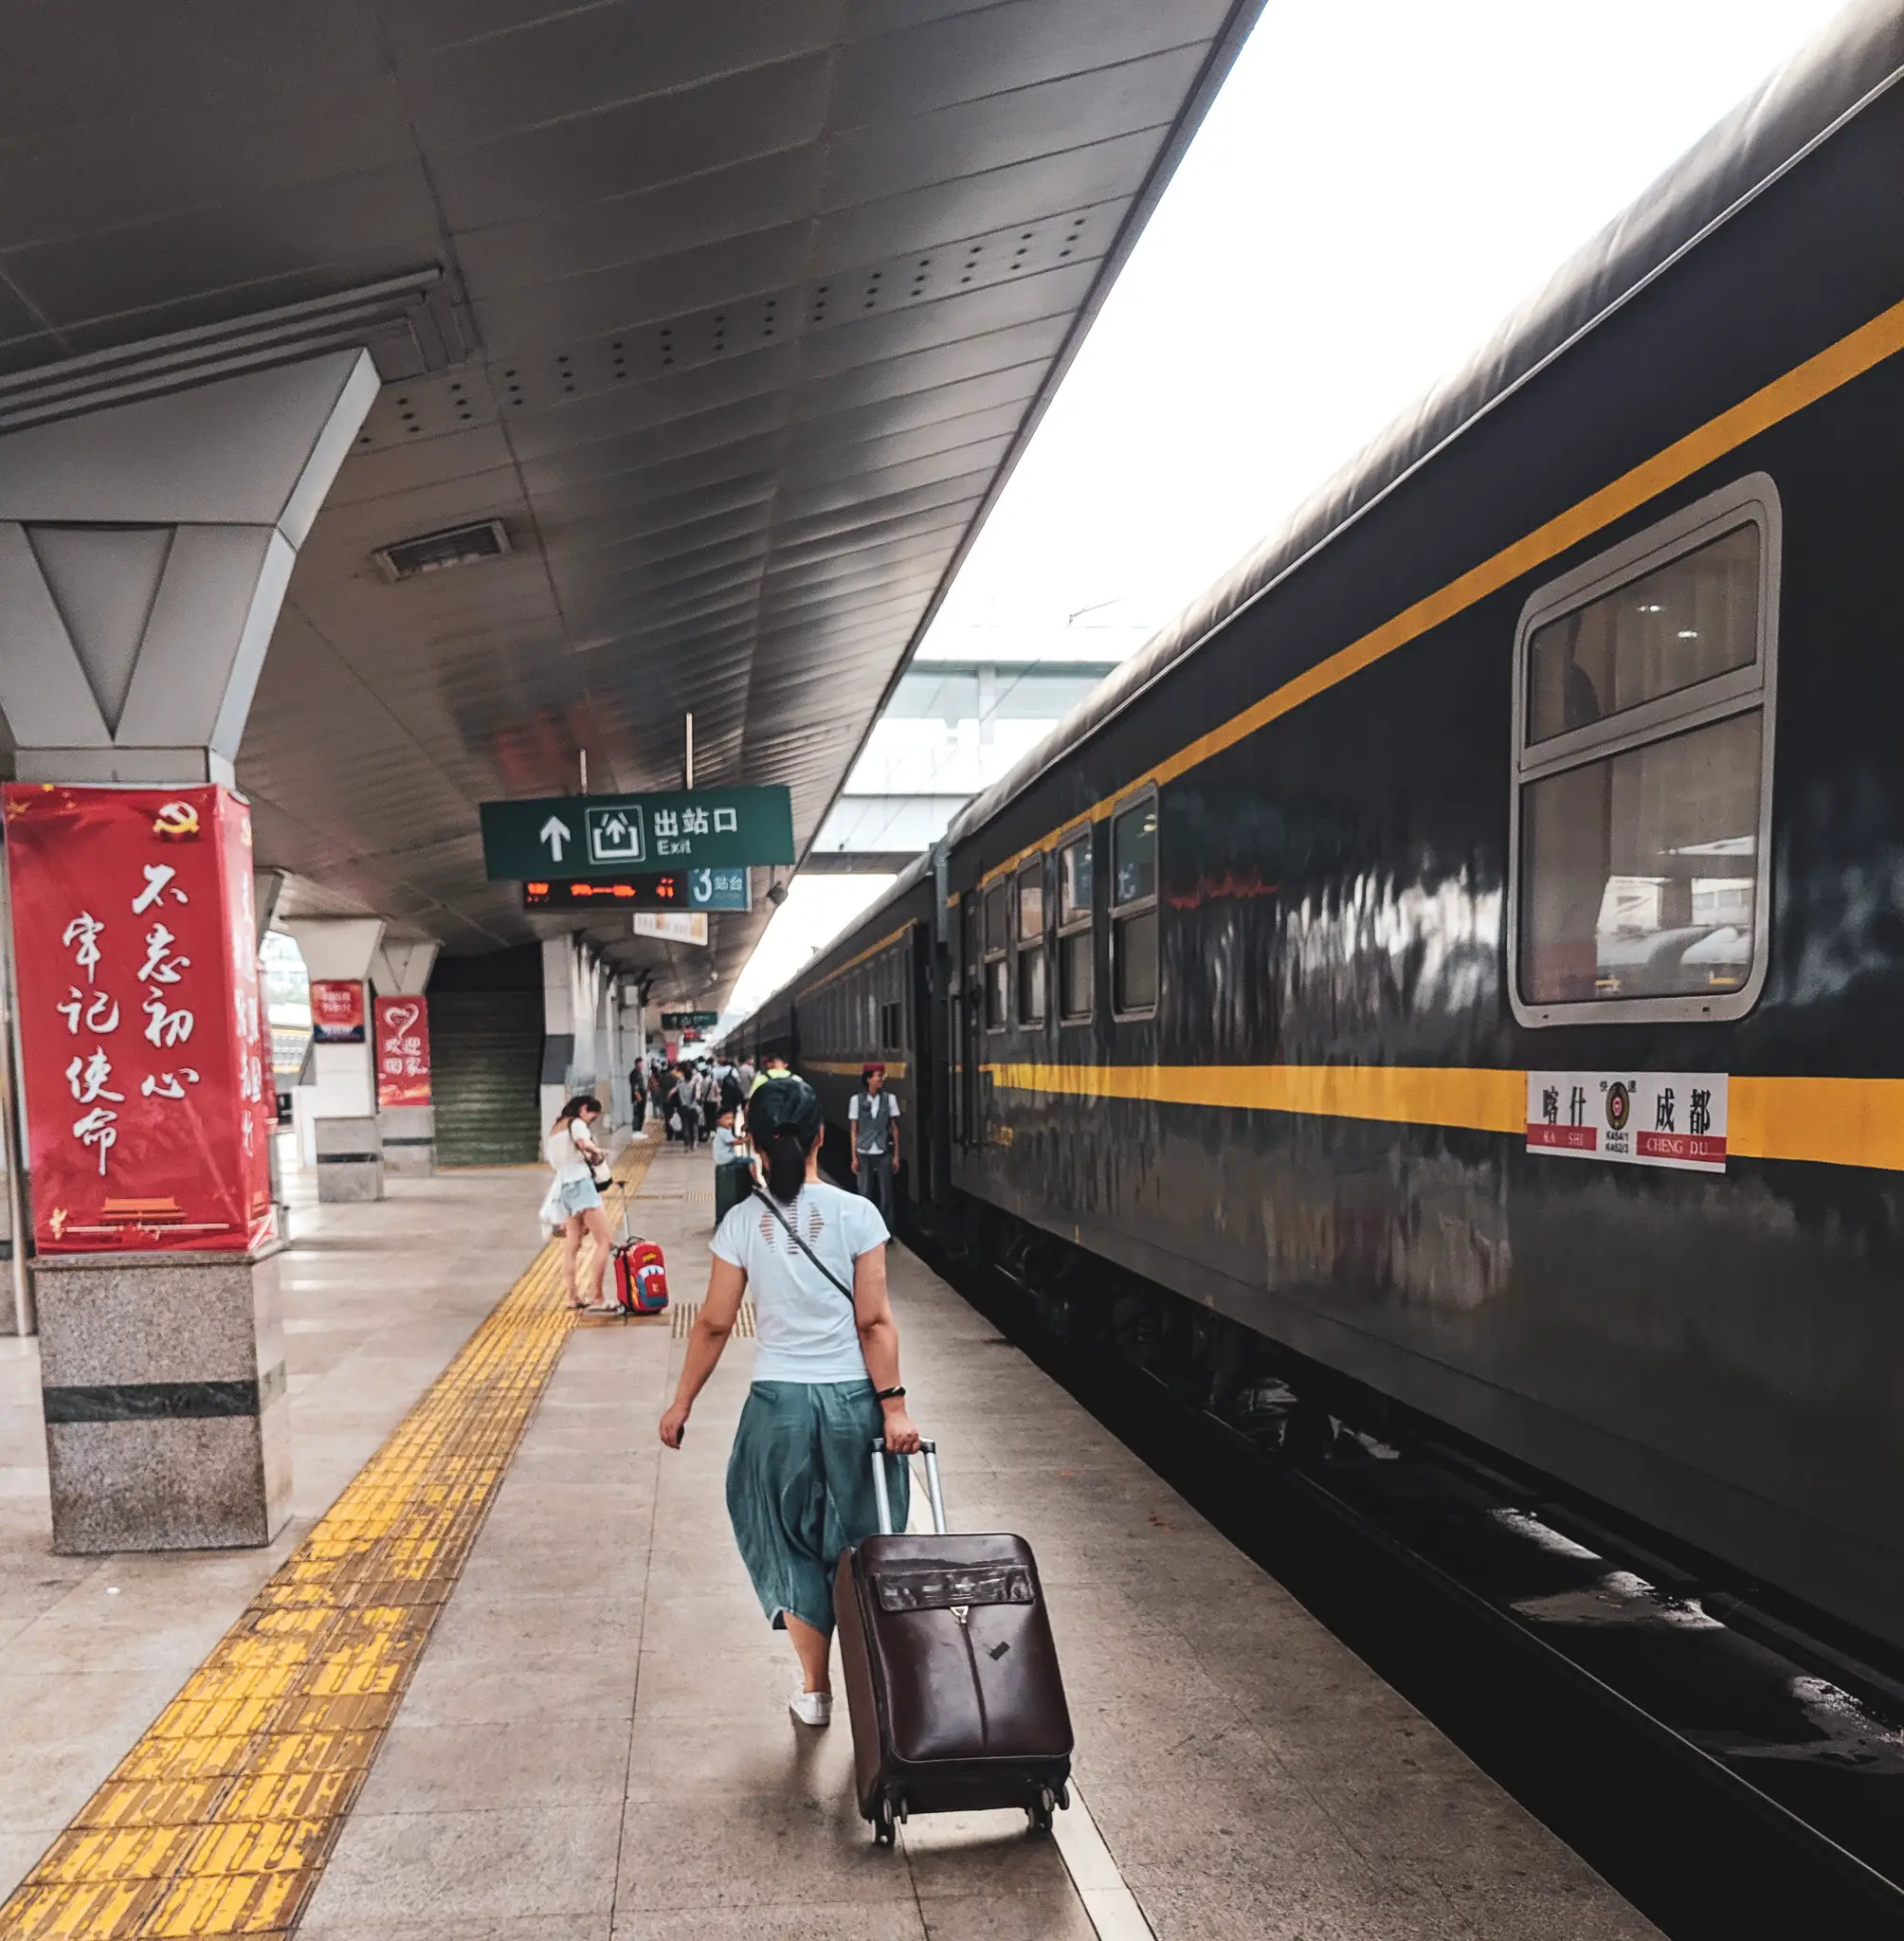 Catching a sleeper train to Kashgar in Chengdu